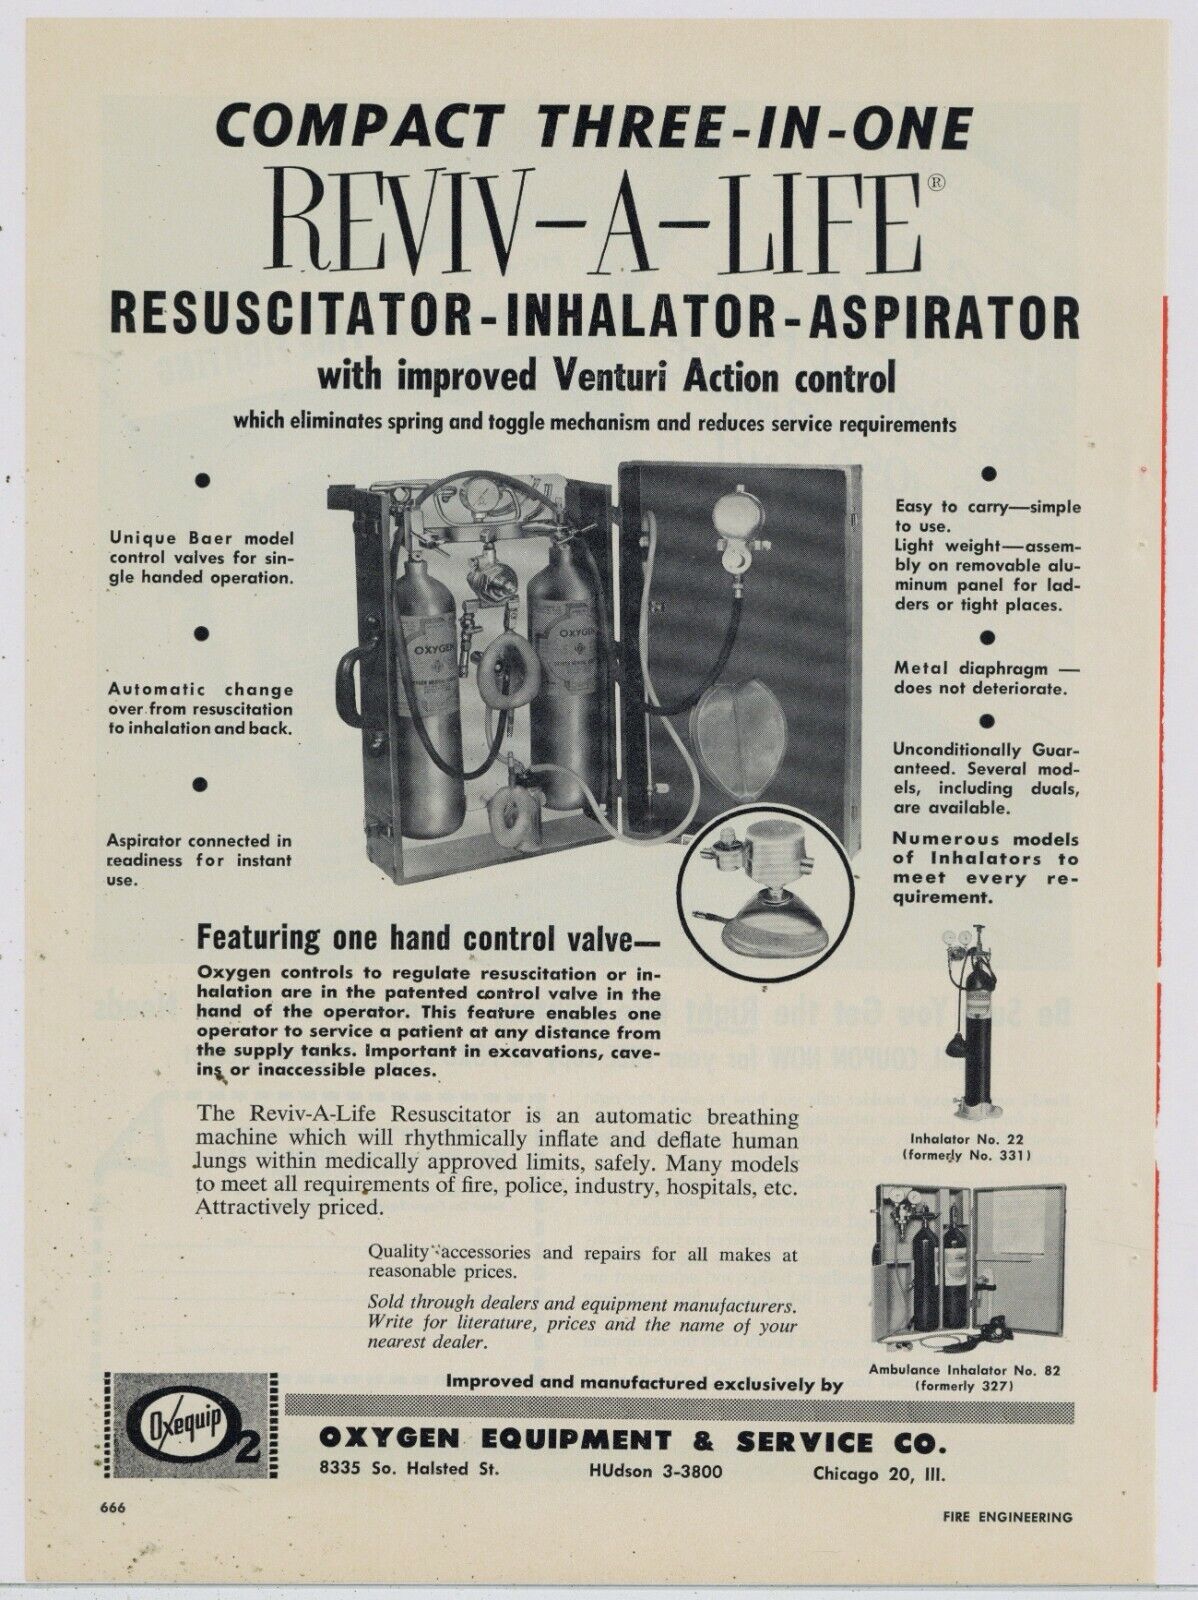 1958 Oxygen Equipment & Service Co. Ad: Reviv-A-Life Compact Resuscitator